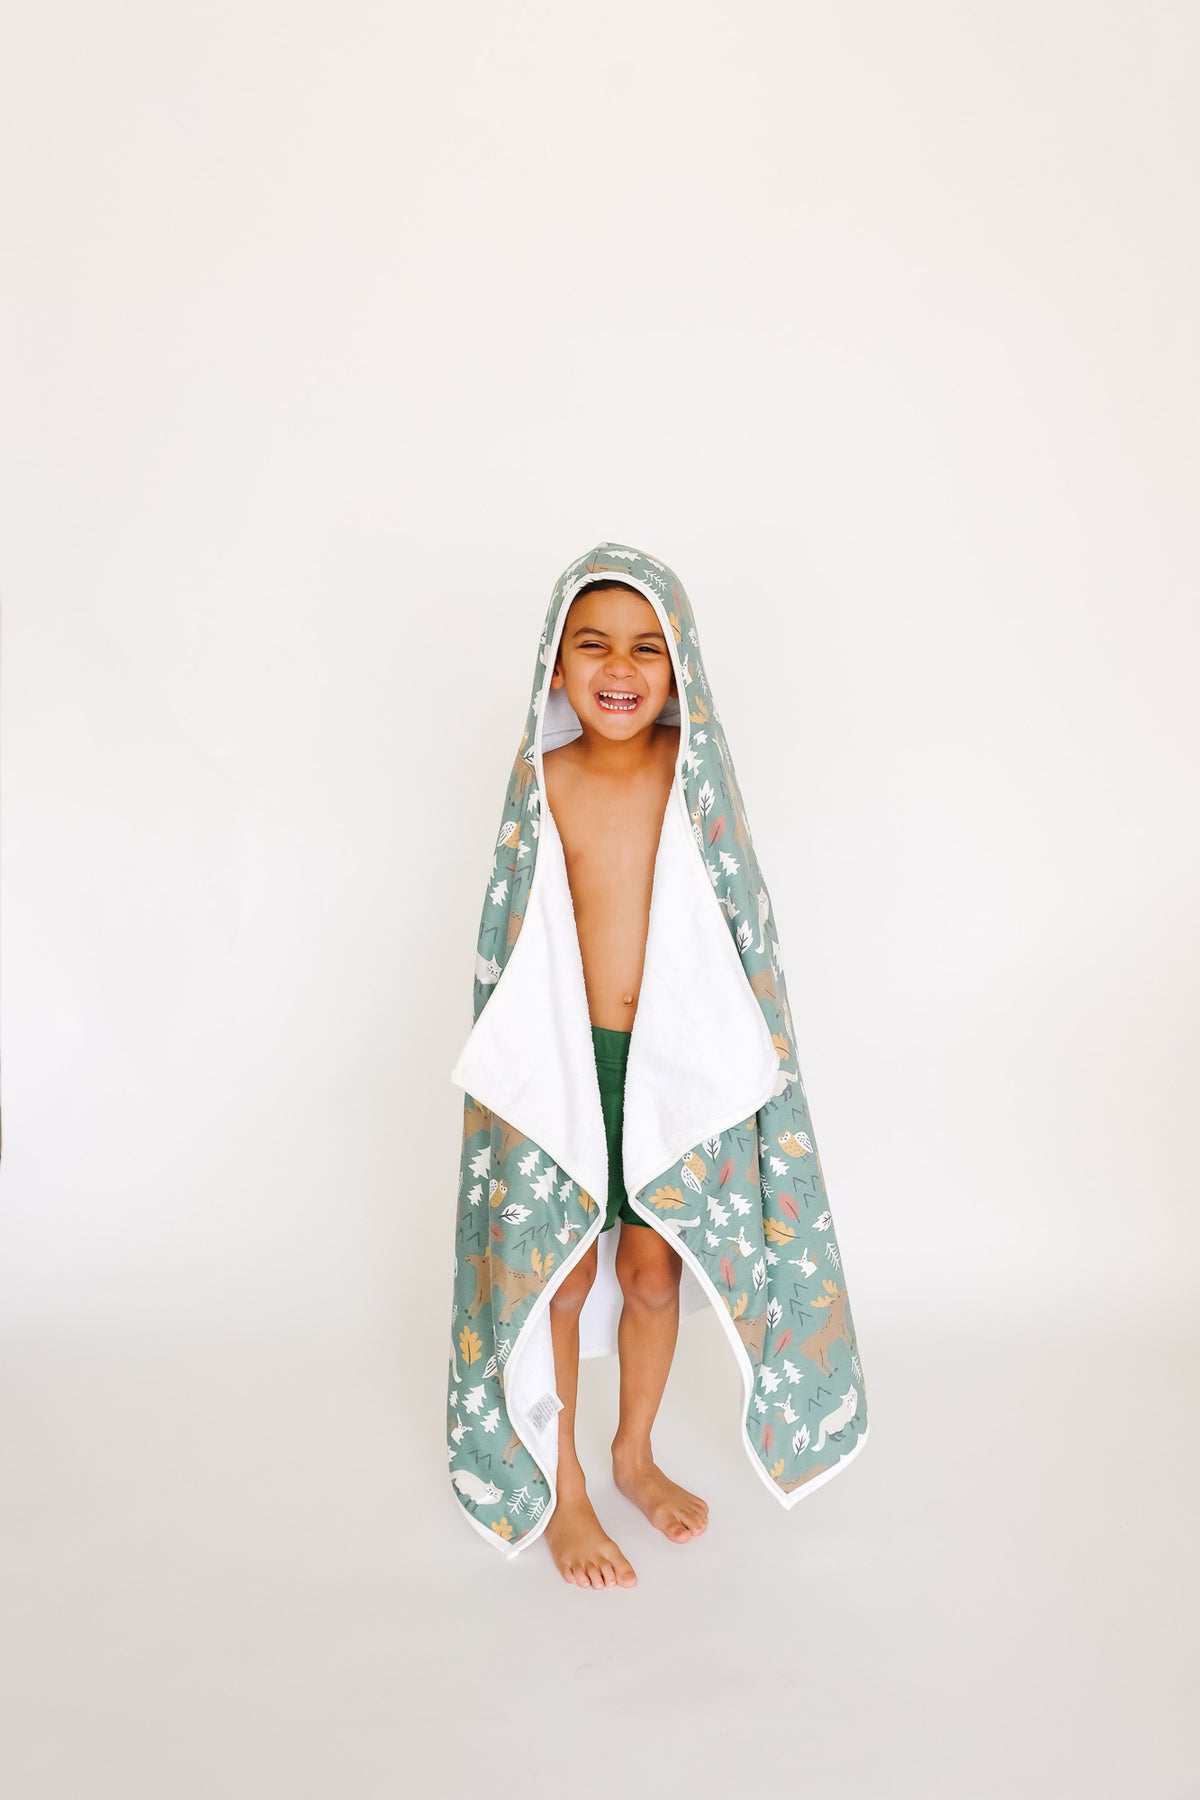 Premium Big Kid Hooded Towel - Atwood